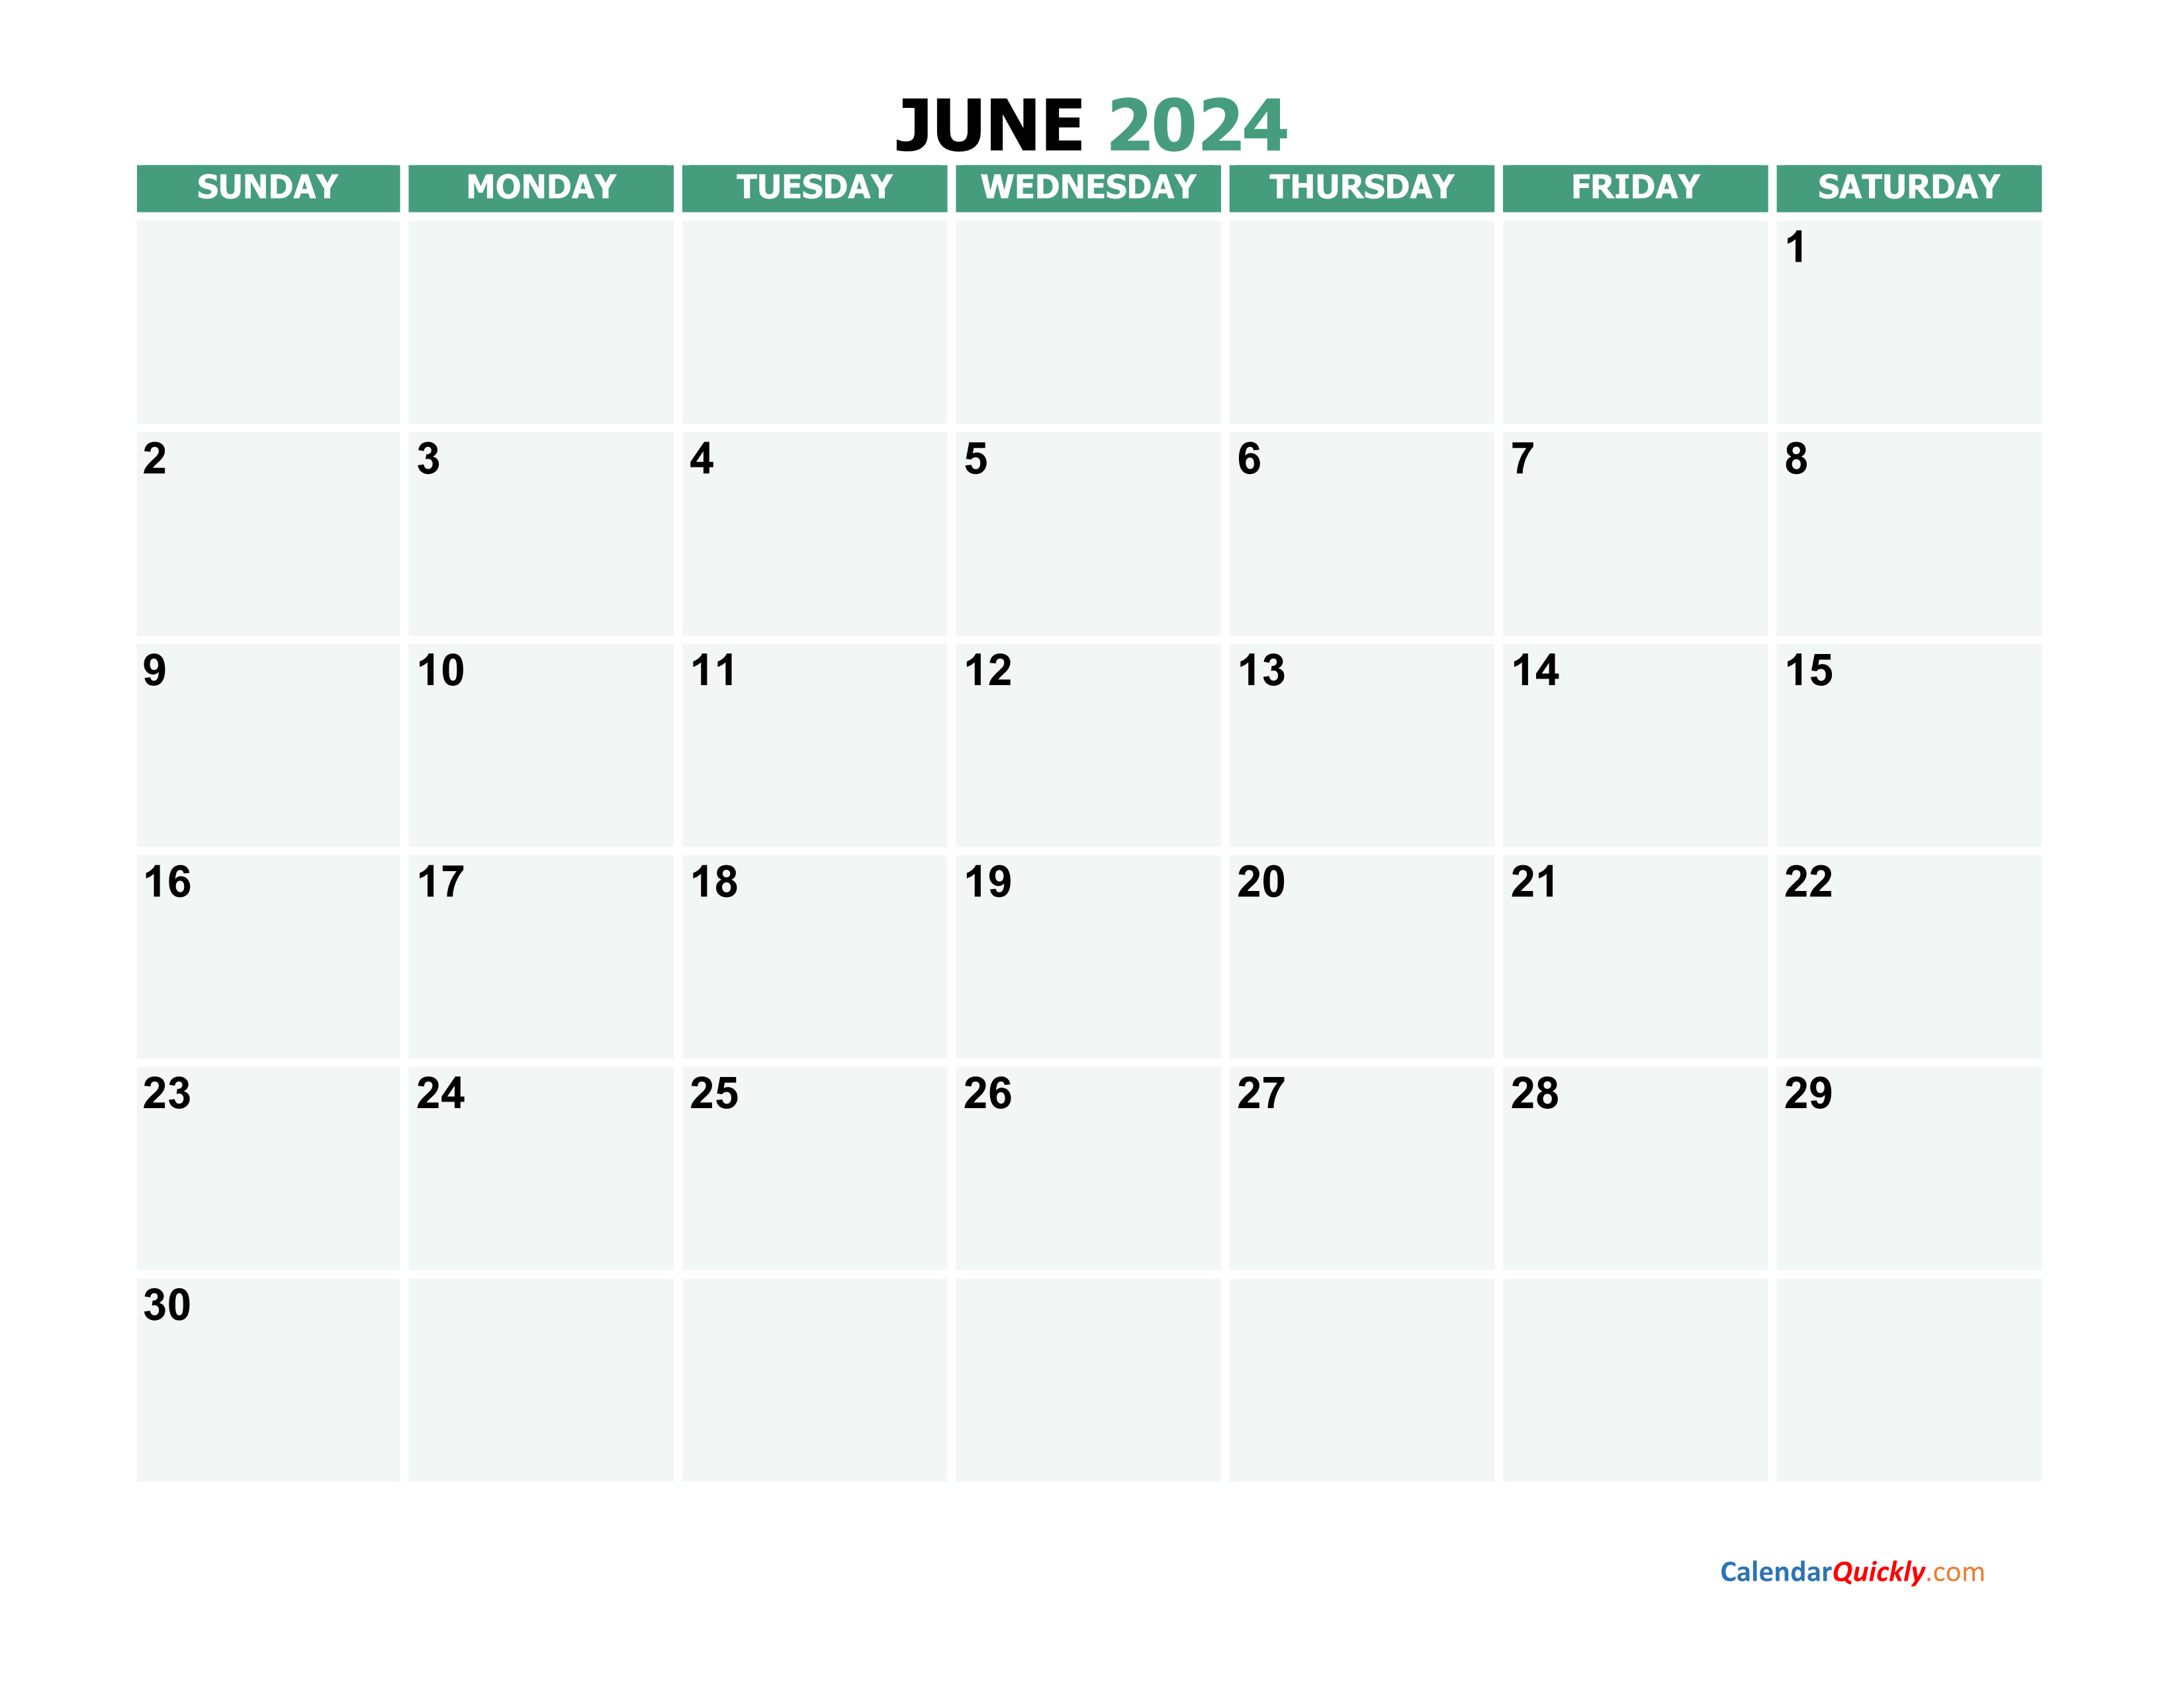 June 2024 Printable Calendar | Calendar Quickly